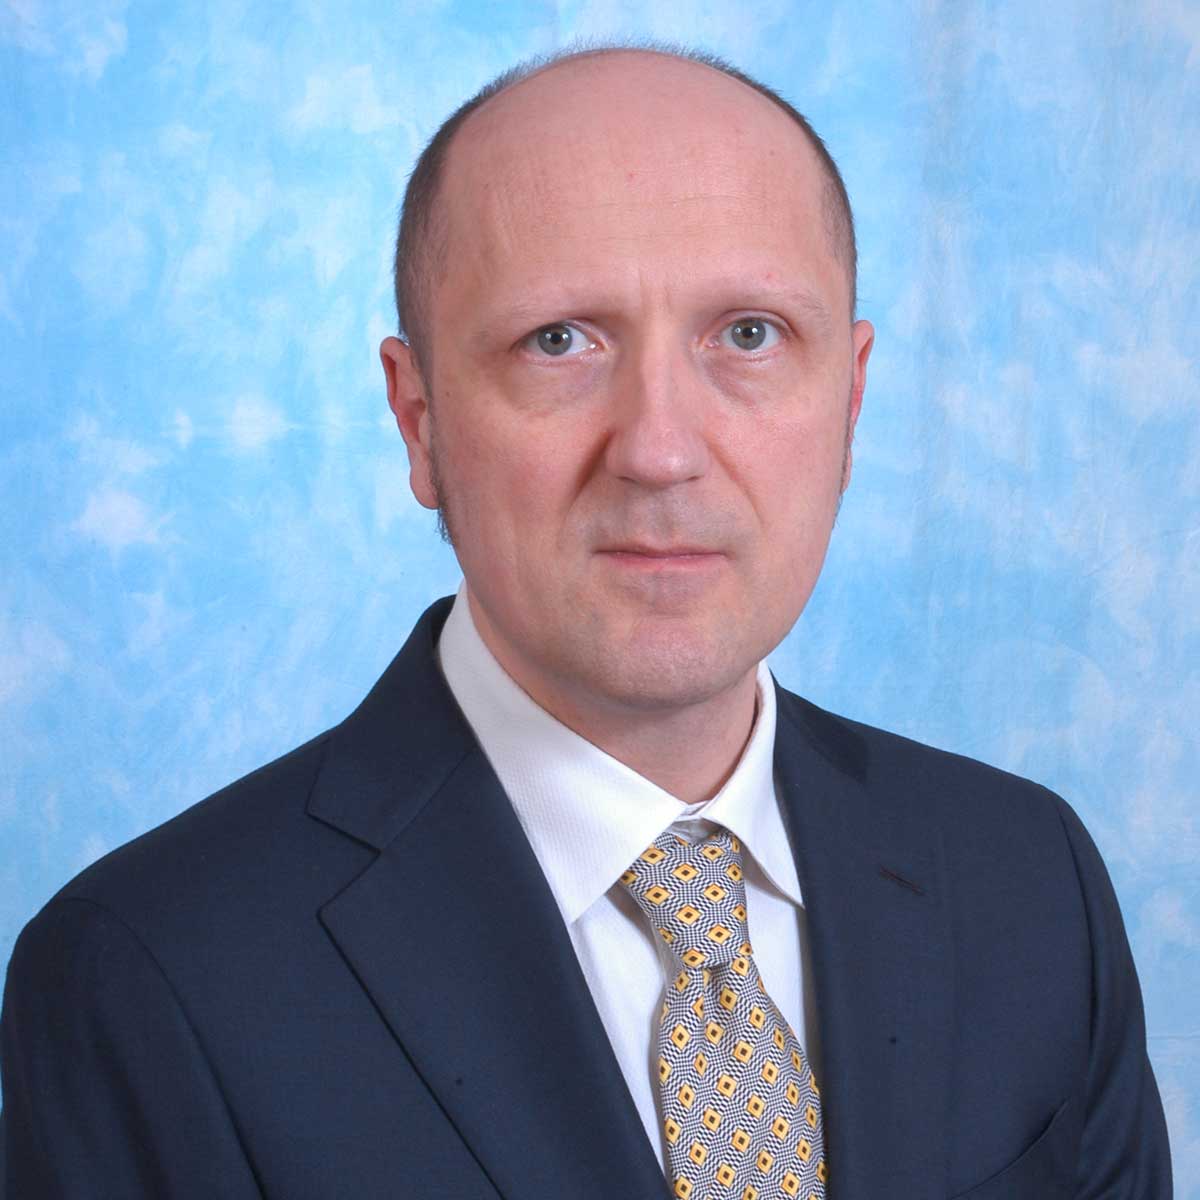 Dr. Olivier Carcuac